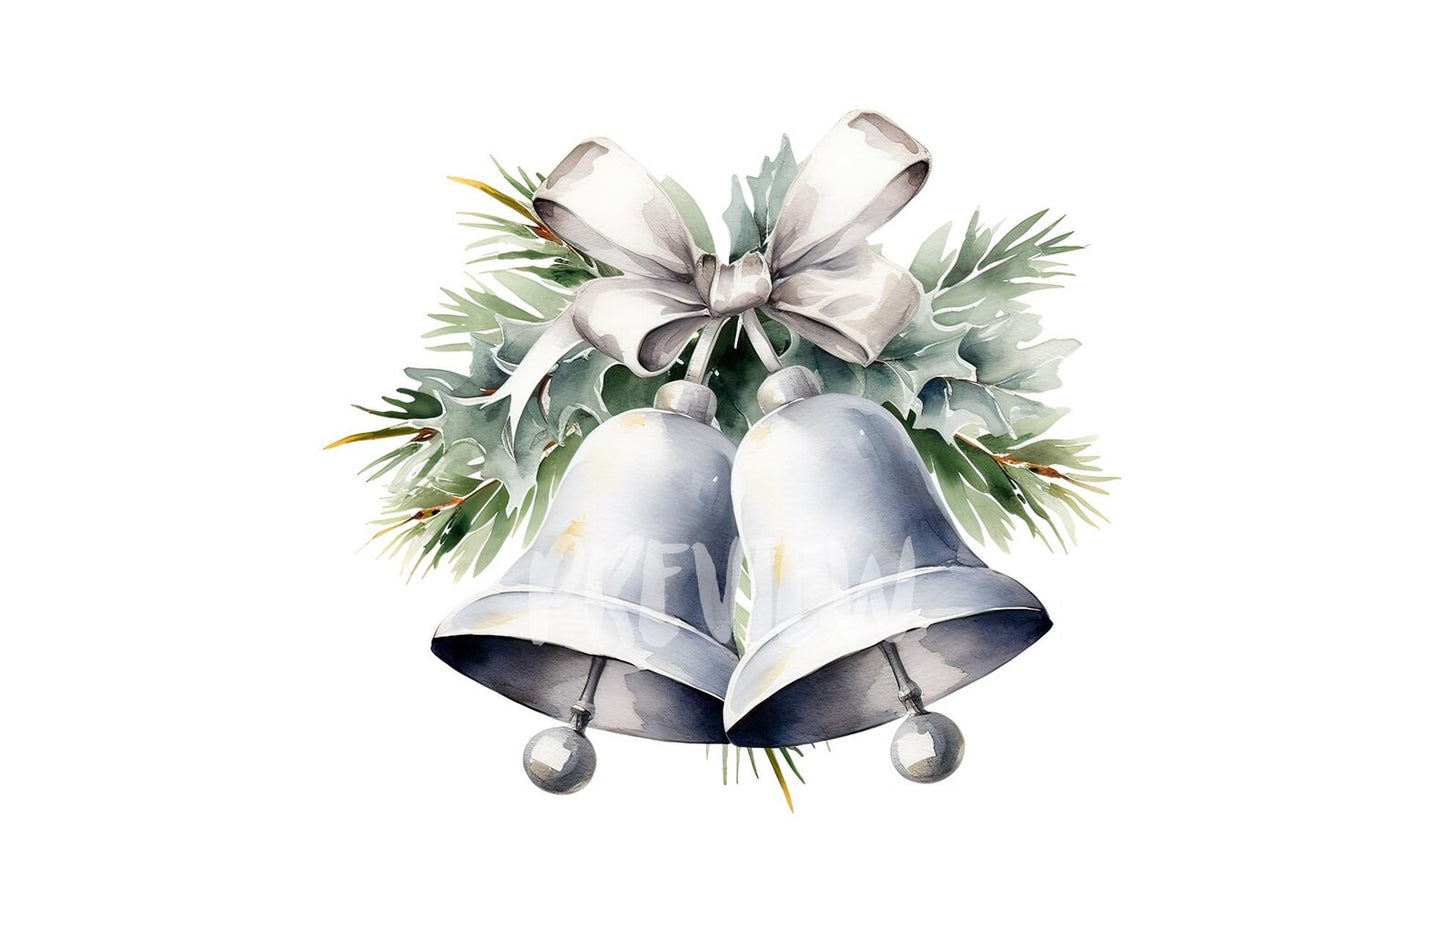 Watercolor Christmas Jingle Bells clipart